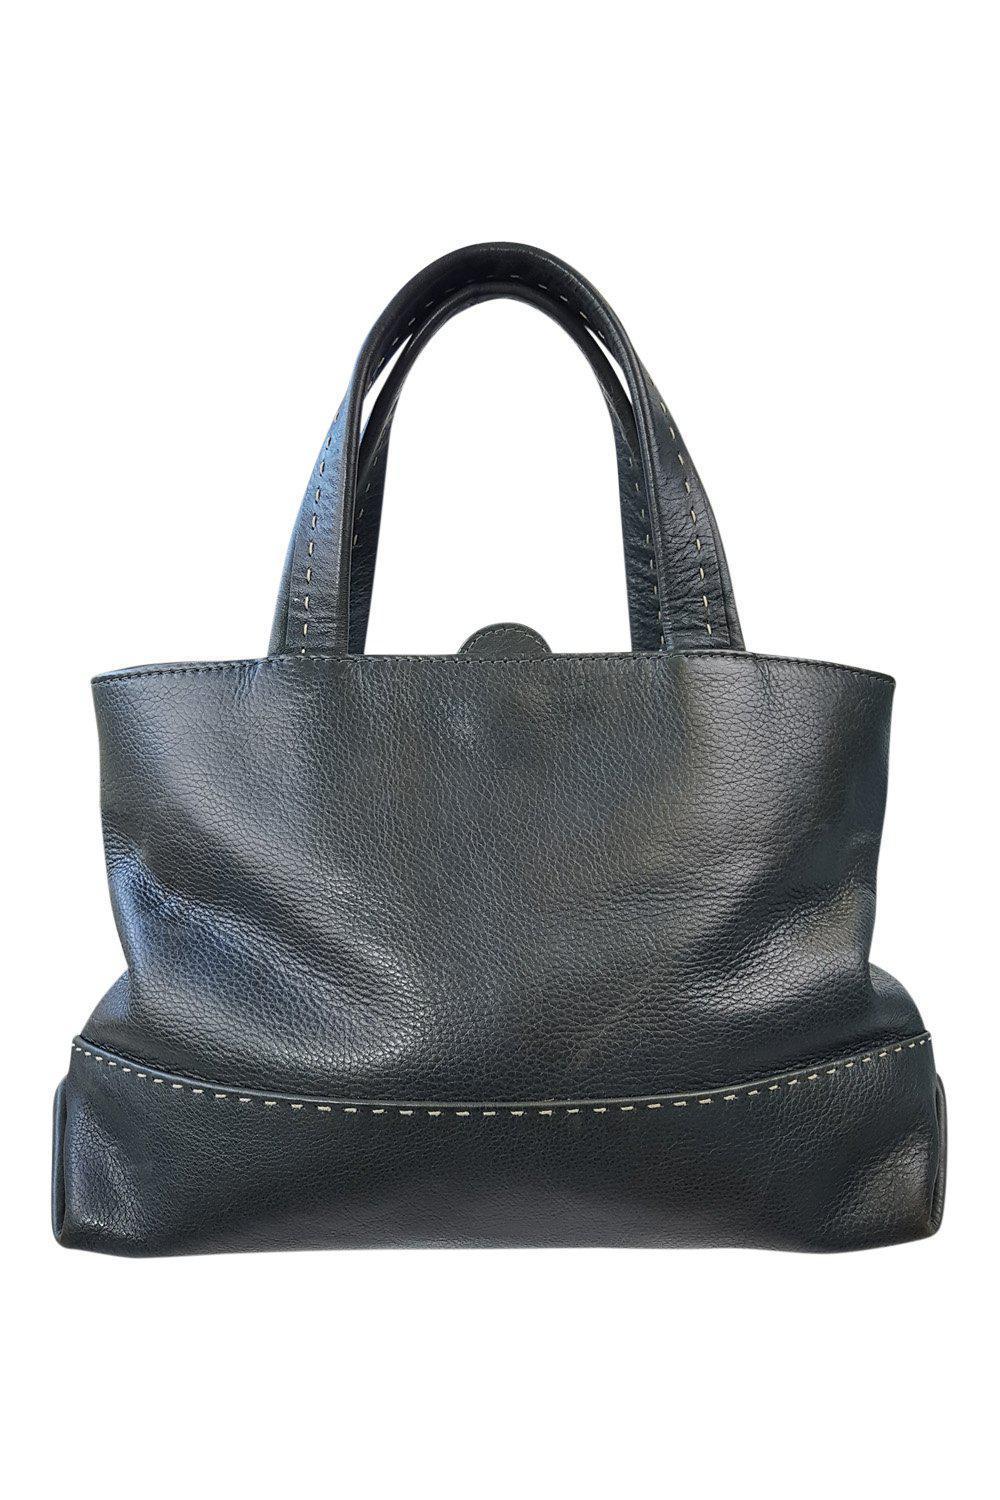 RADLEY Black Leather tote Bag (M)-Radley-The Freperie